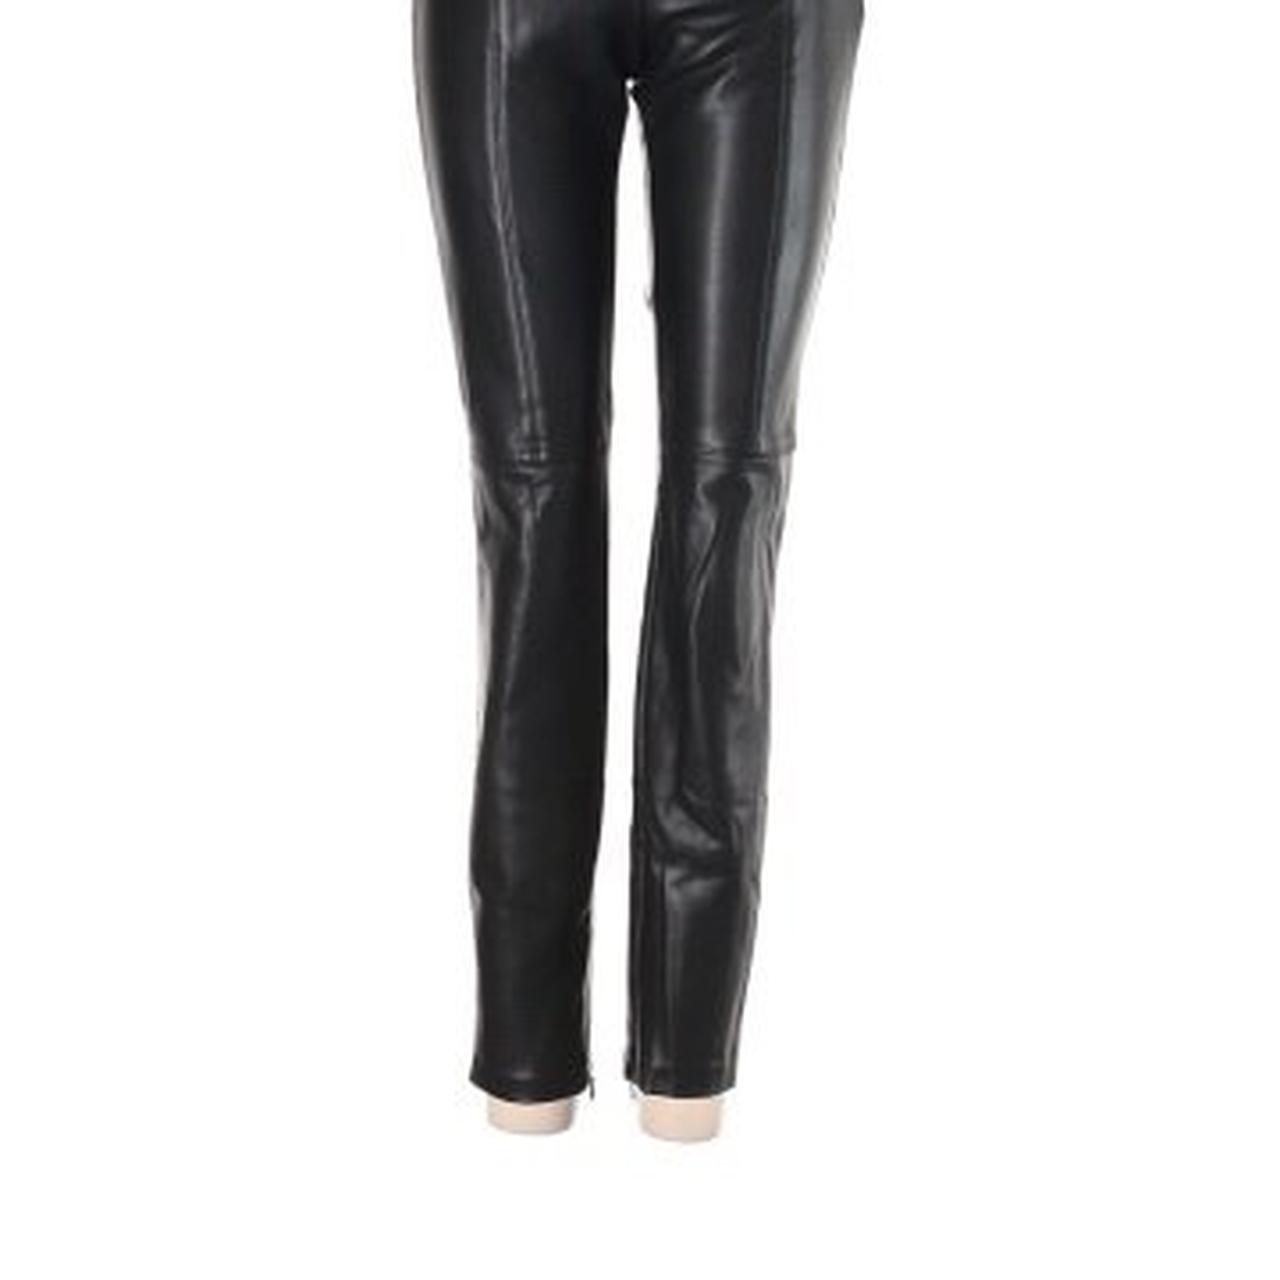 Zara Faux Leather Pants - Zipper at bottom